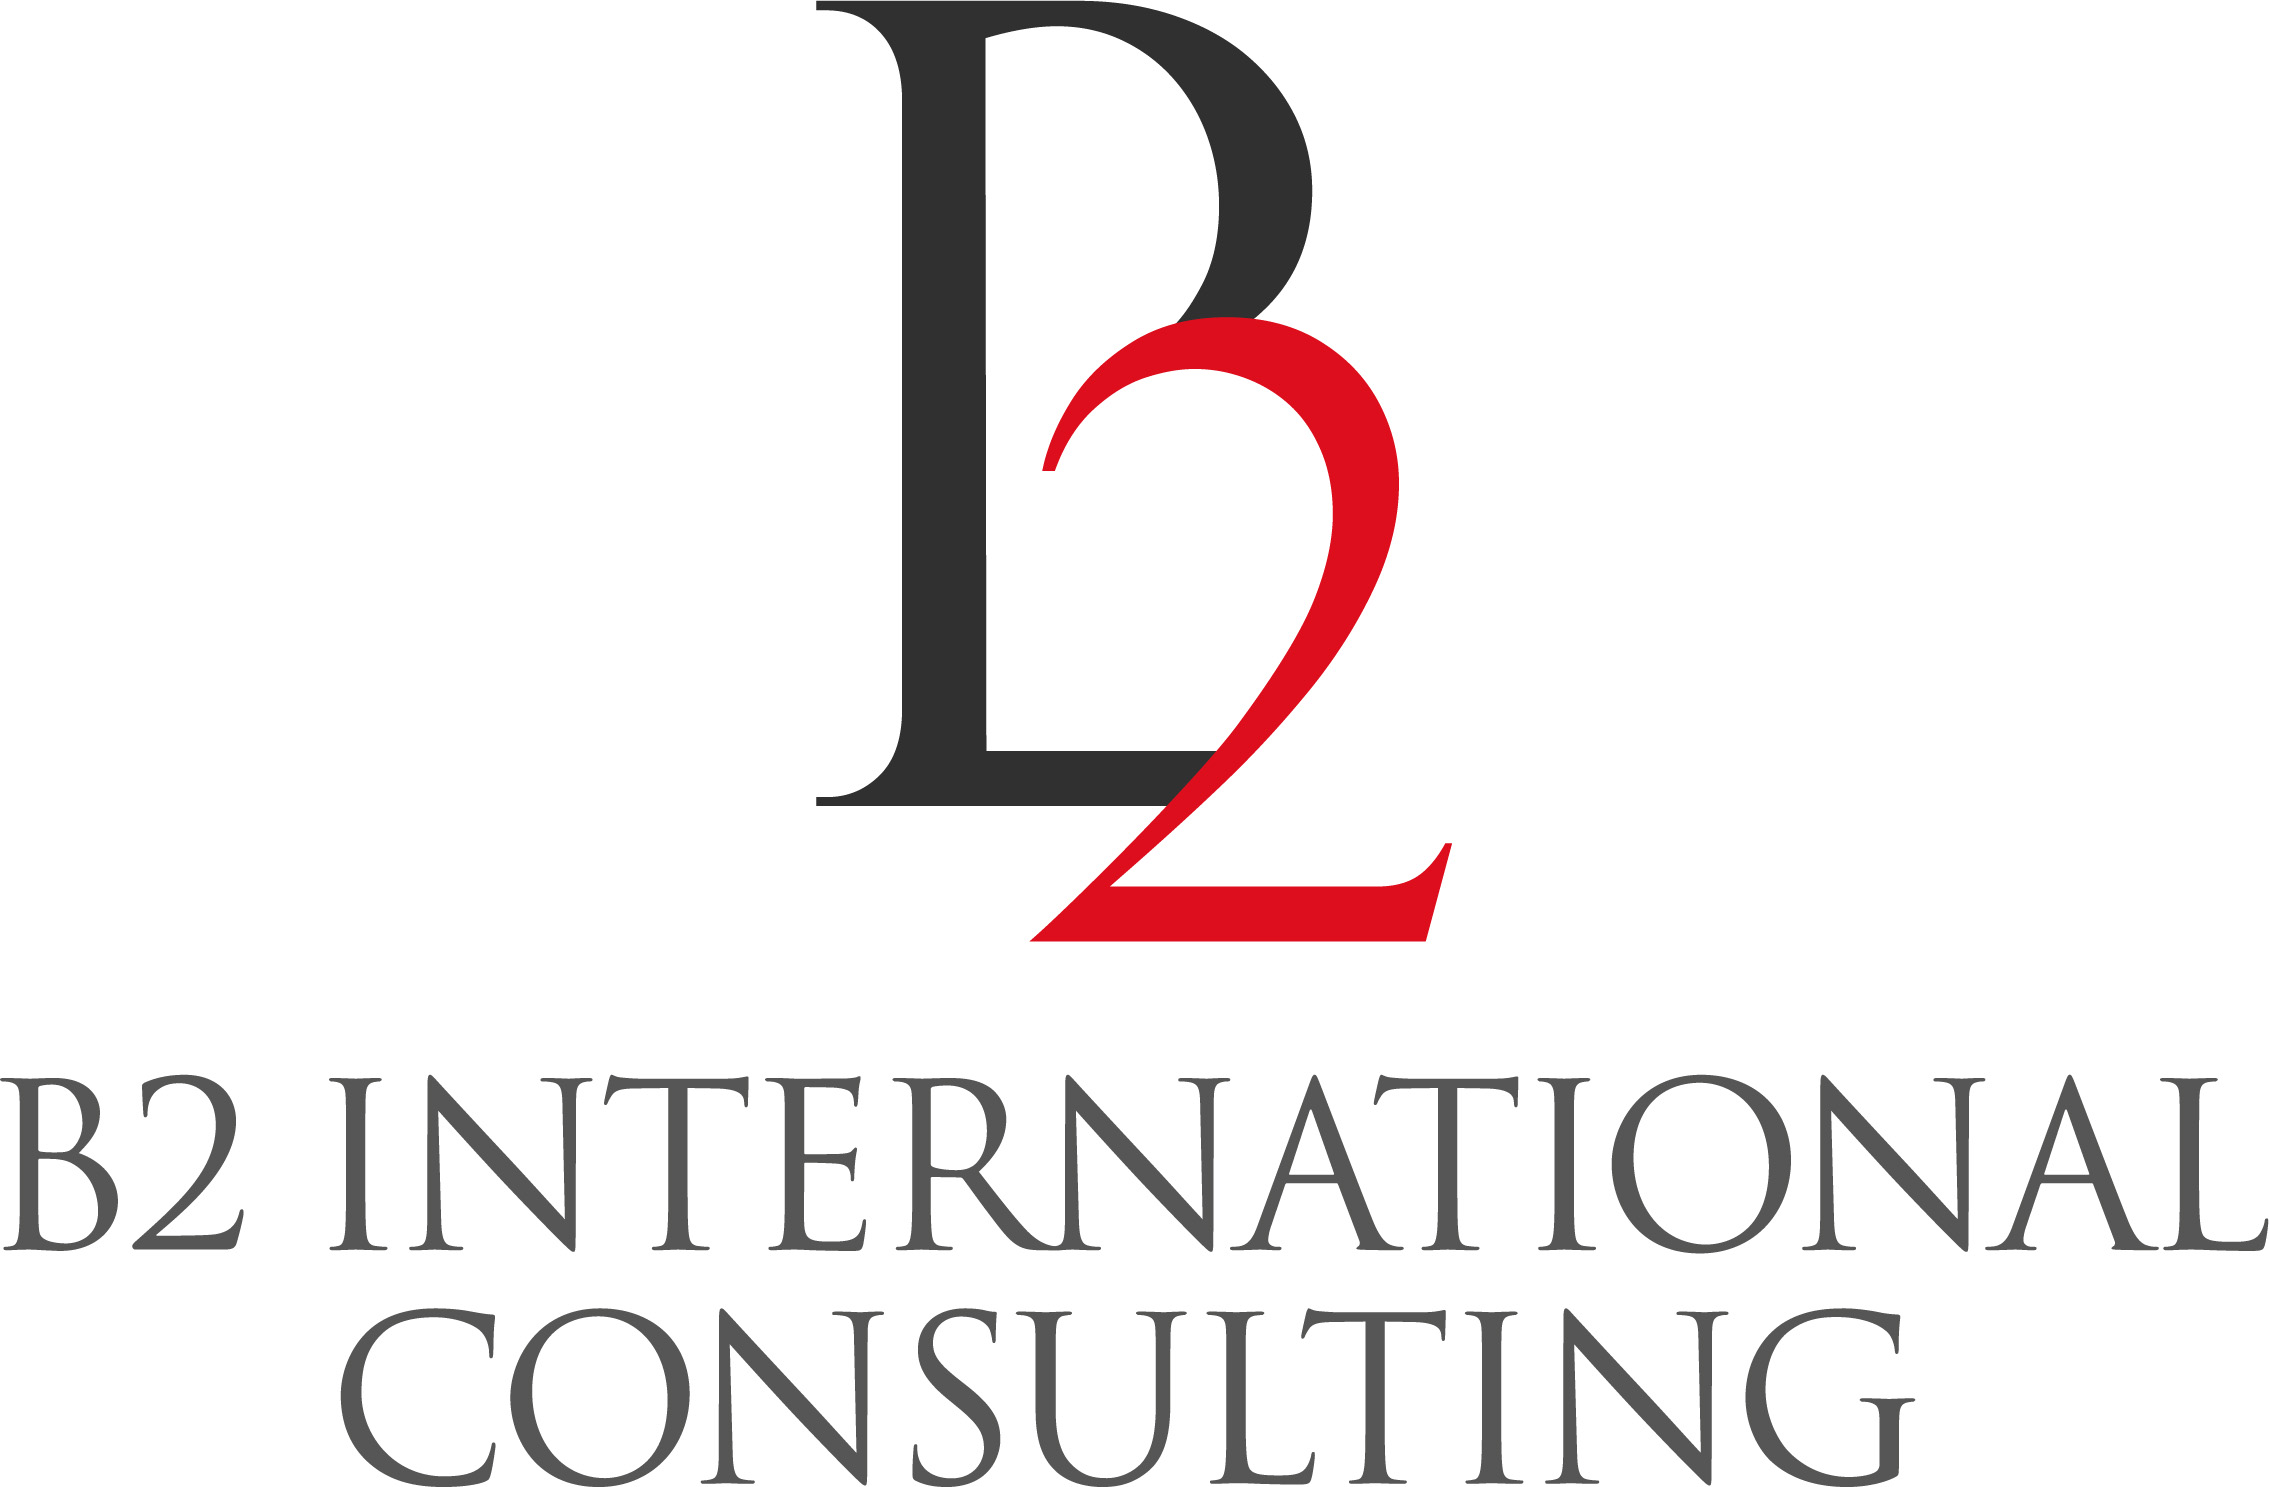 B2 INTERNATIONAL CONSULTINGB2 INTERNATIONAL CONSULTING